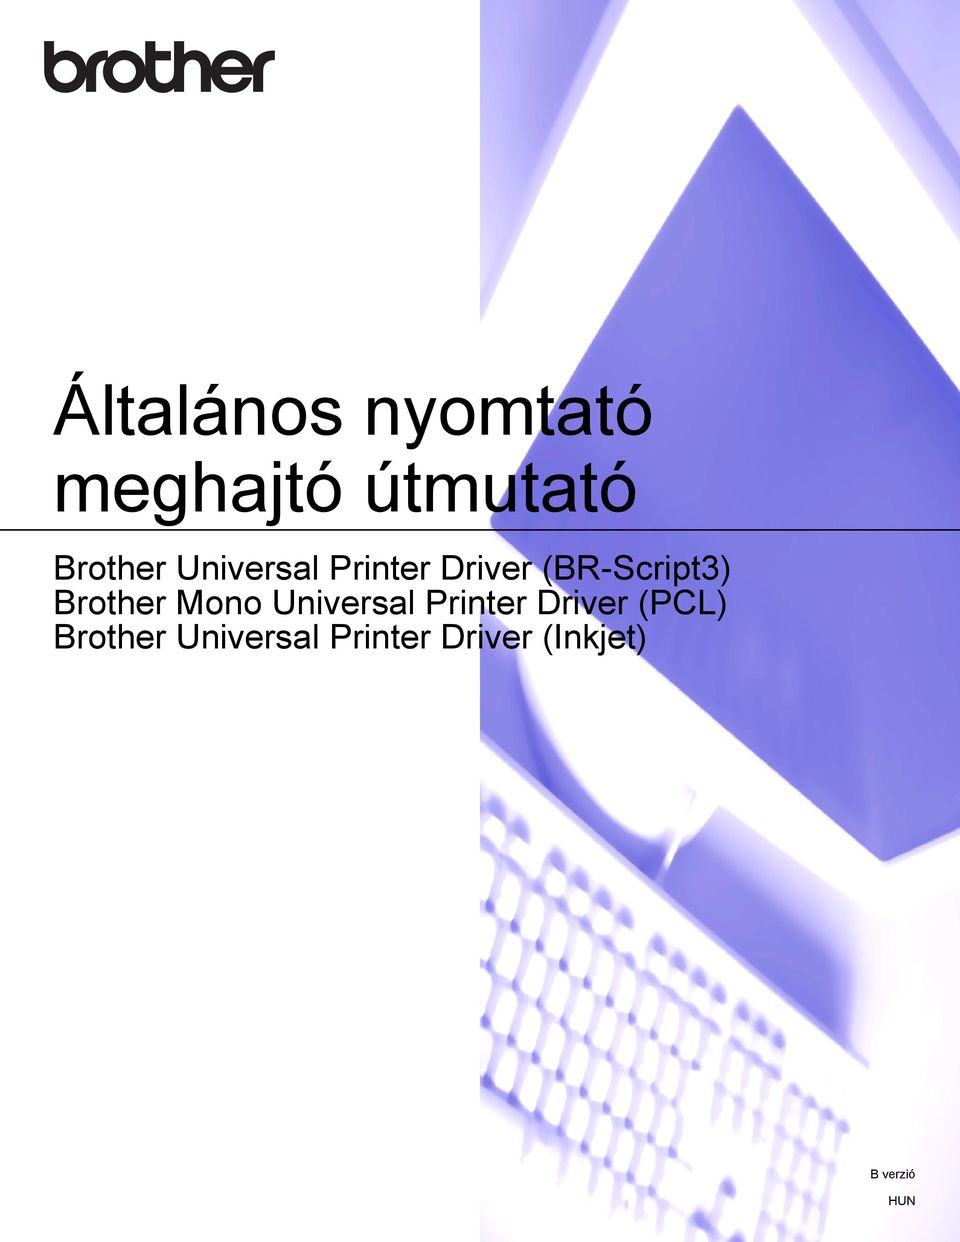 Mono Universal Printer Driver (PCL) Brother